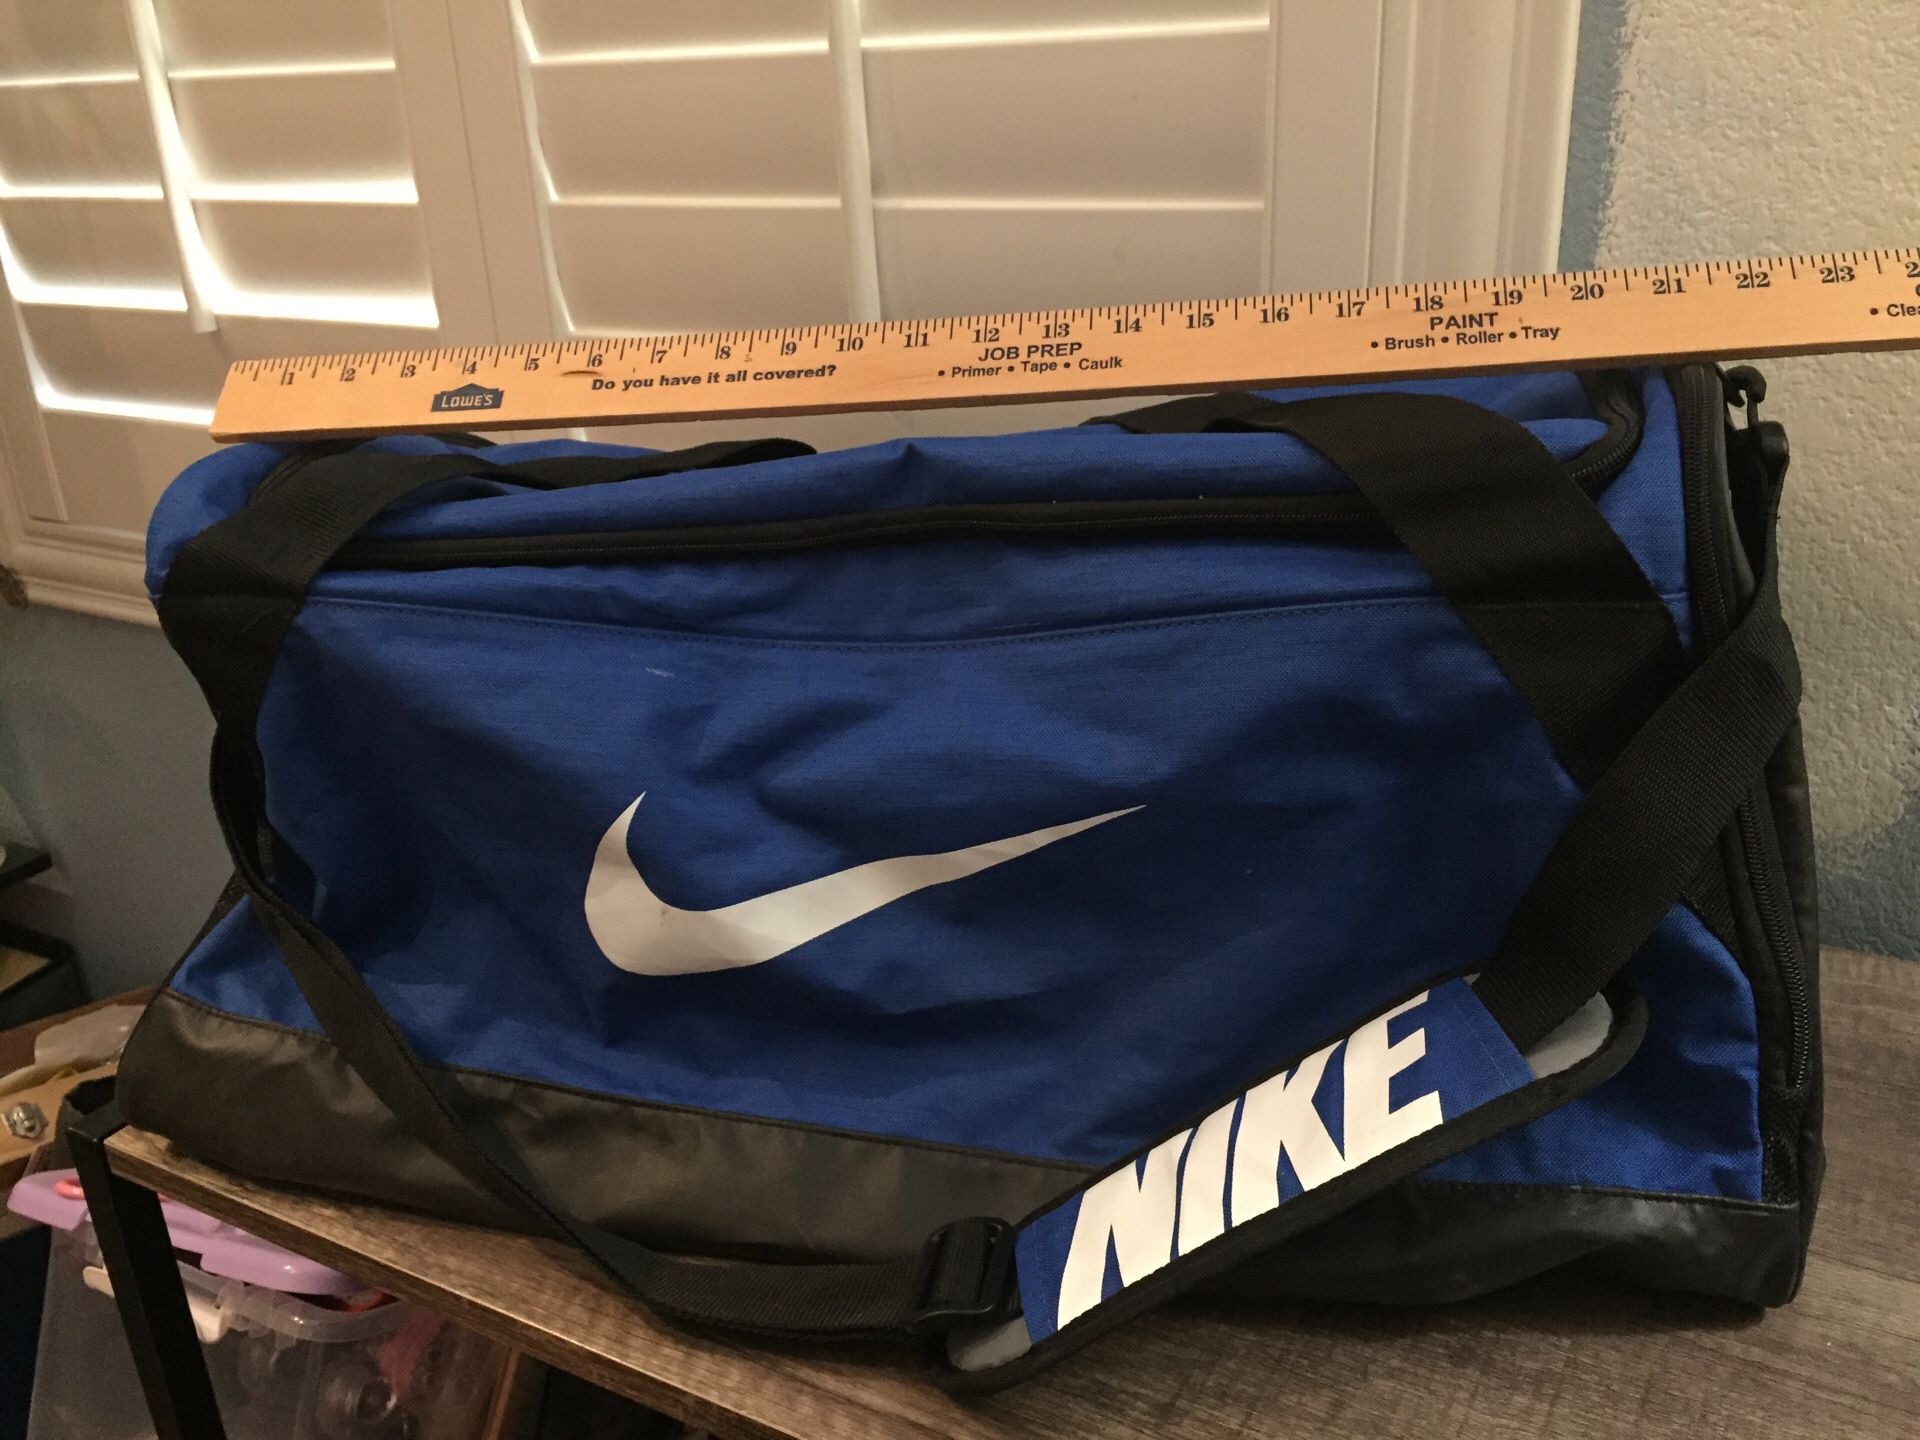 Nike duffle bag (blue & black)